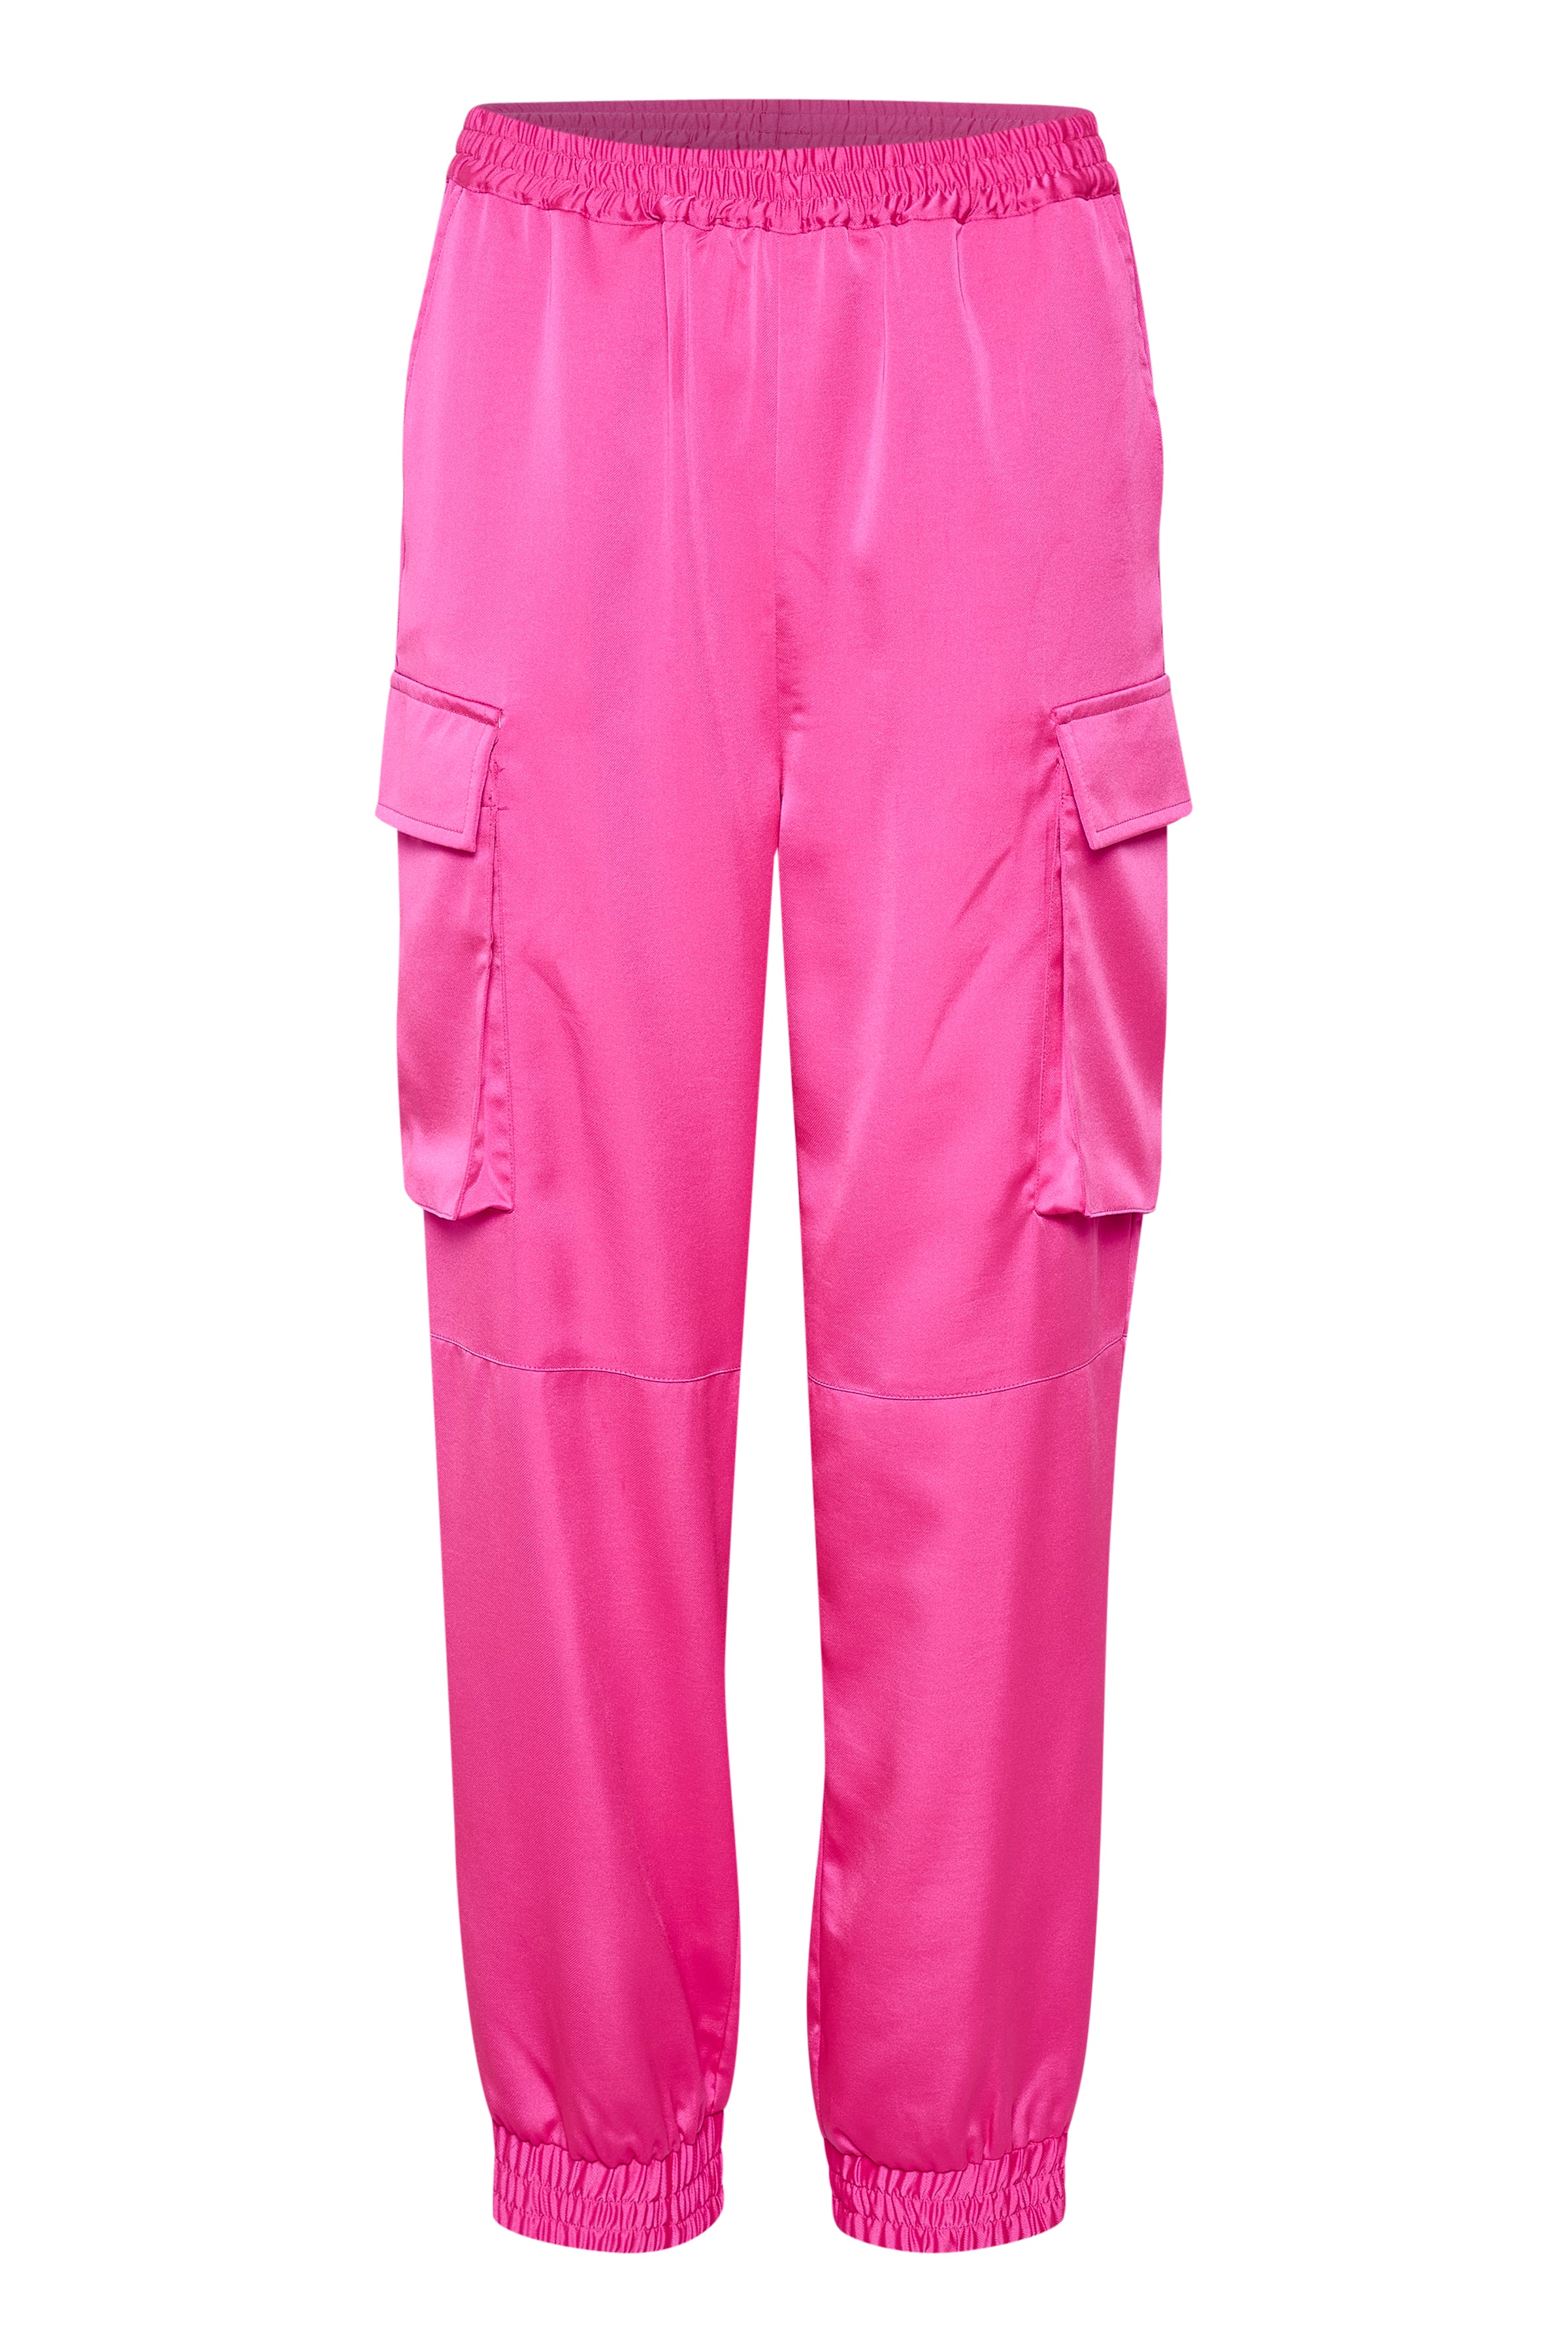 Saint Tropez Bianca Silky Satin Cargo Trouser in Winterberry Pink